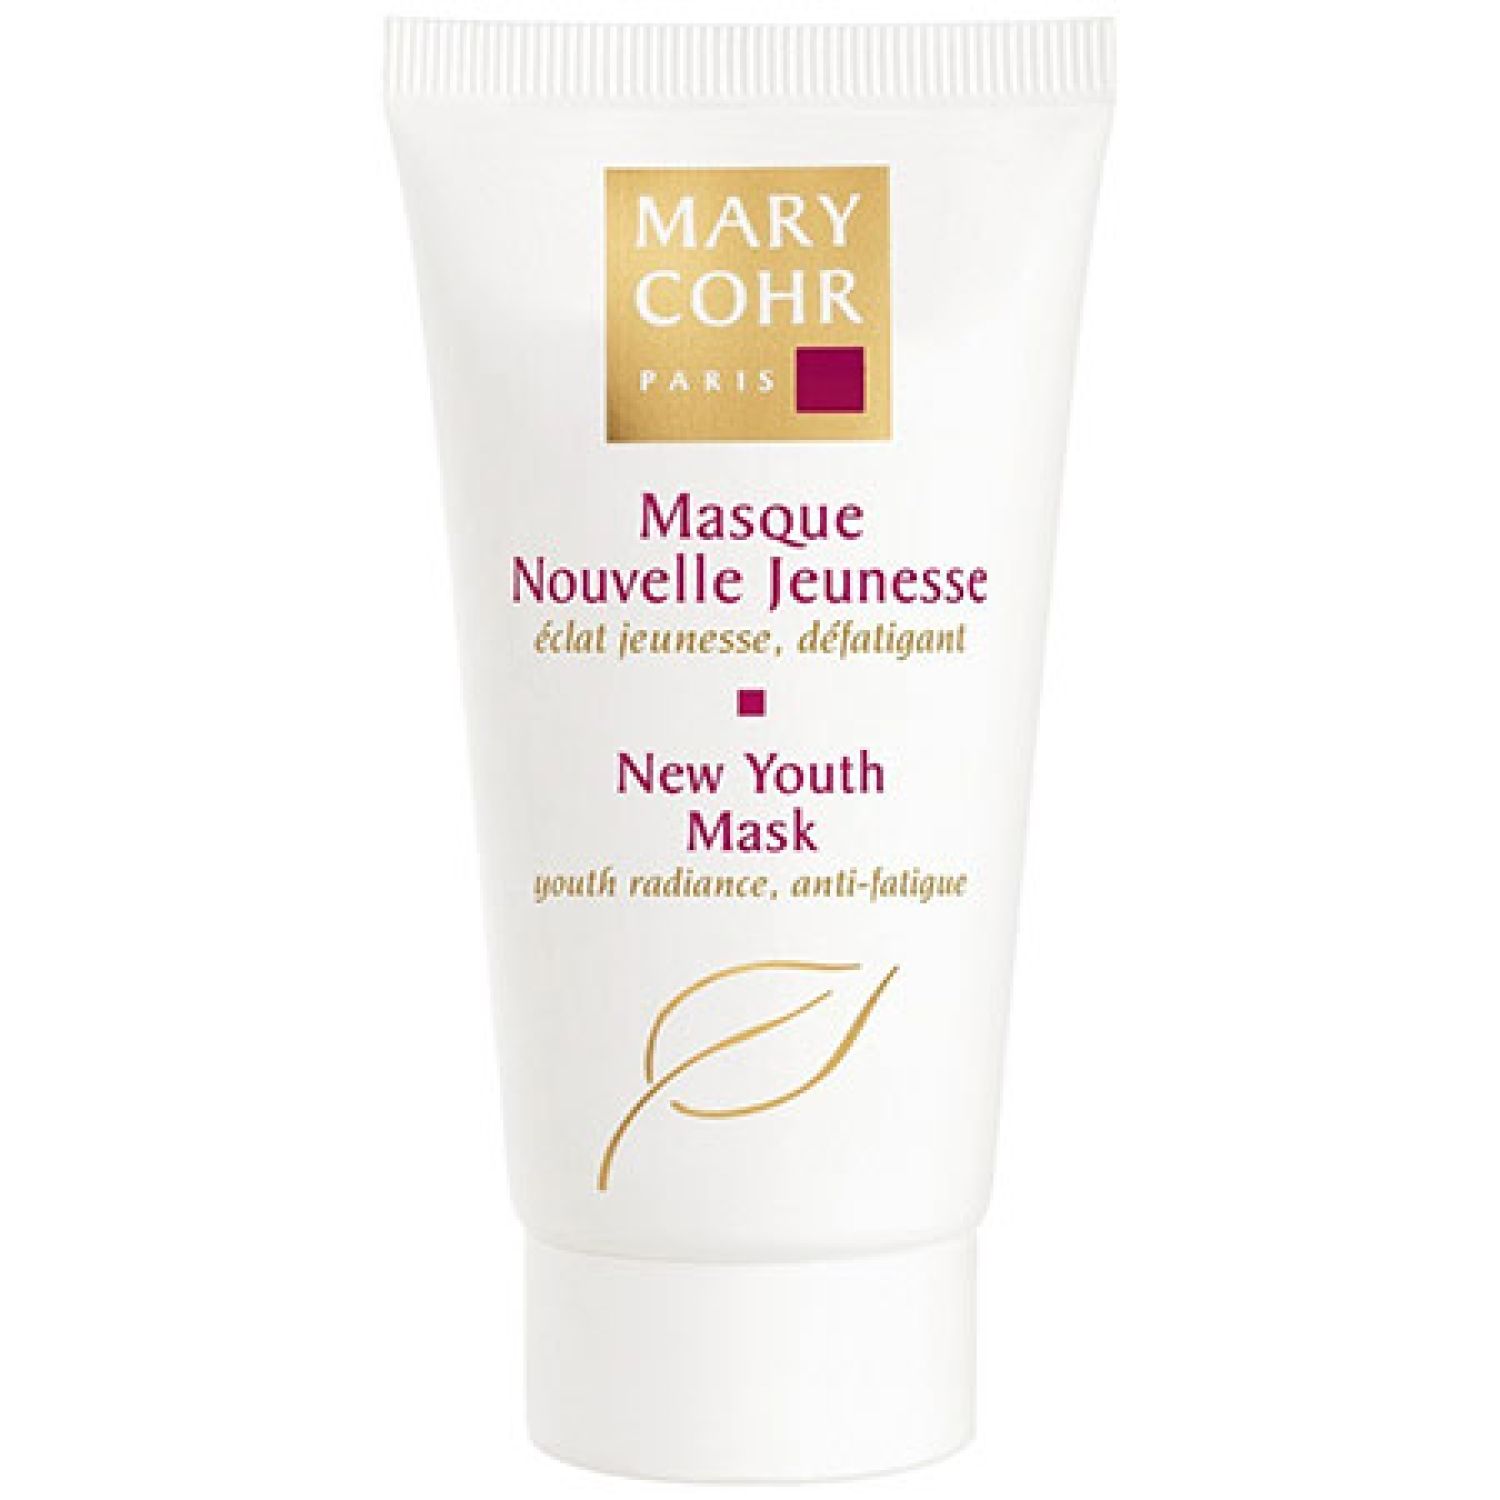 Mary Cohr Paris Nouvelle Jeunesse Masque- New Youth Mask